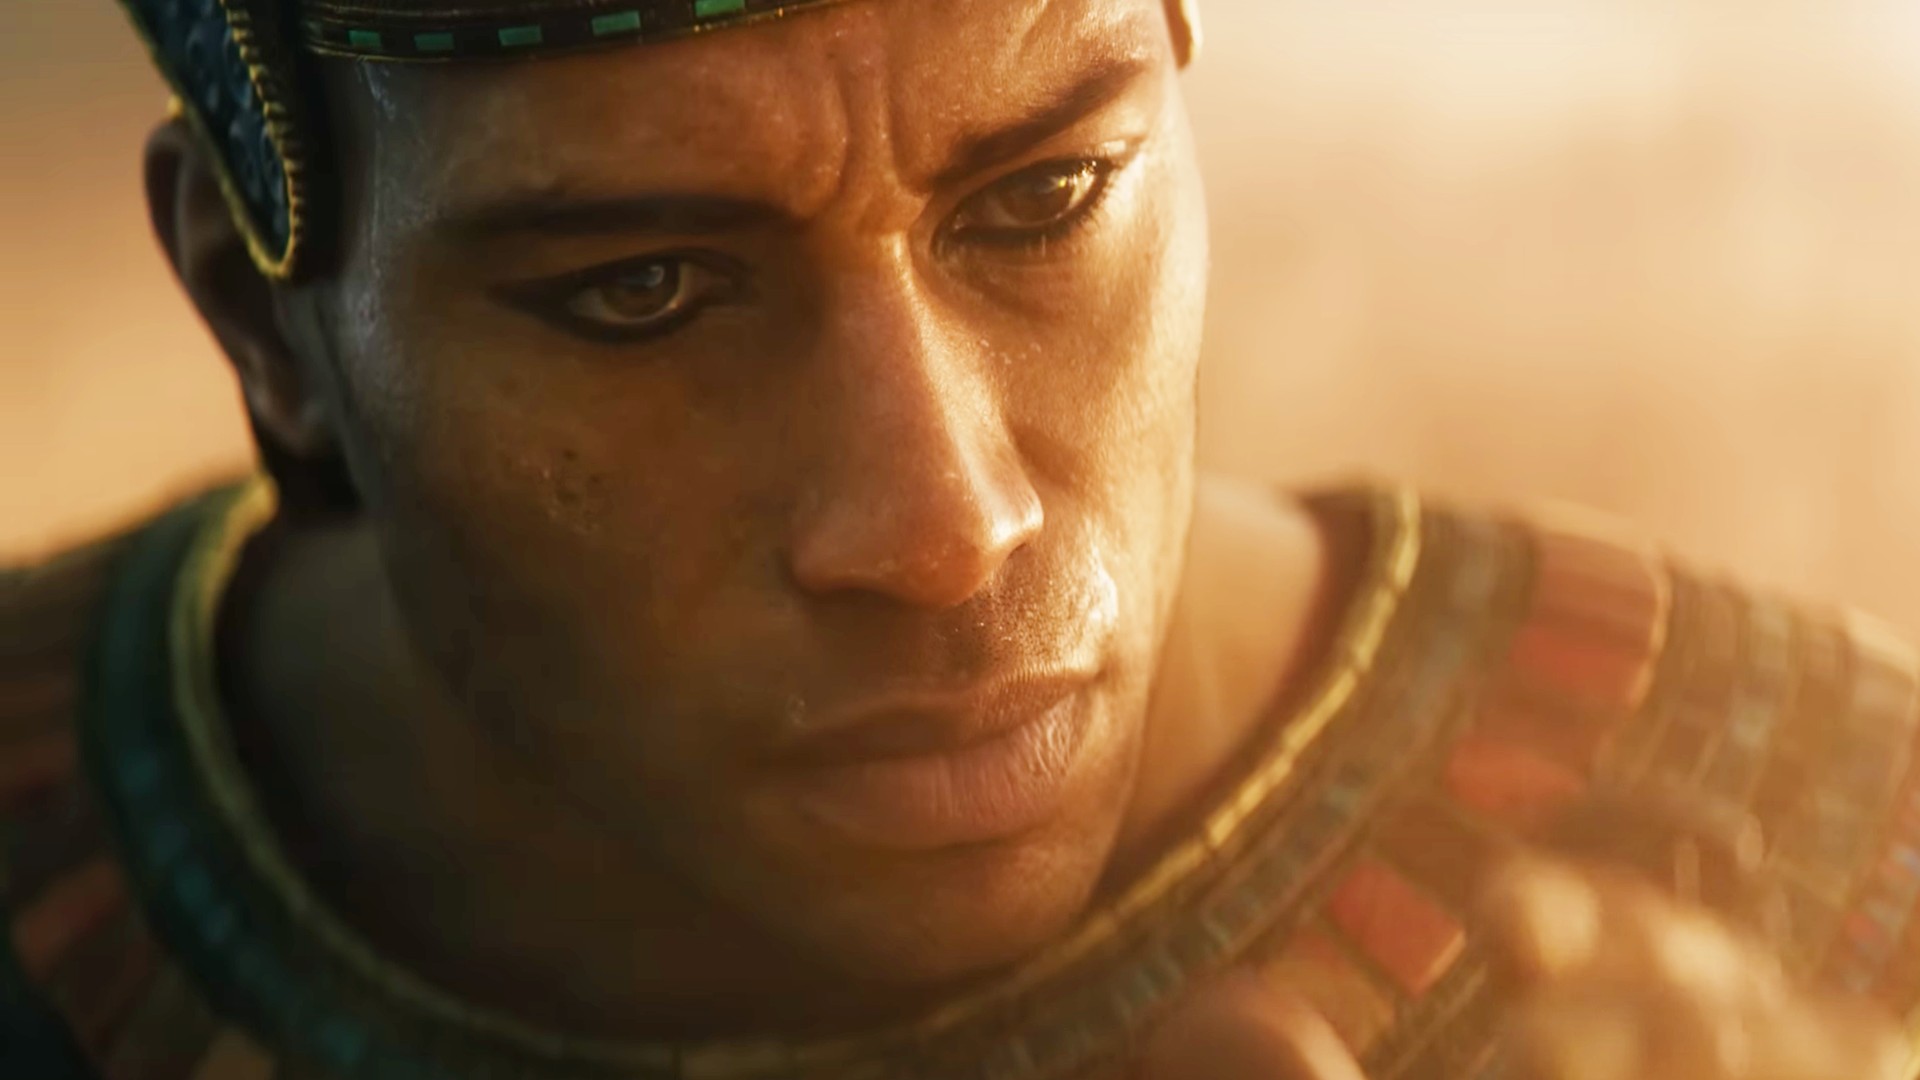 Total War: Pharaoh feels like a response to the series' Warhammer